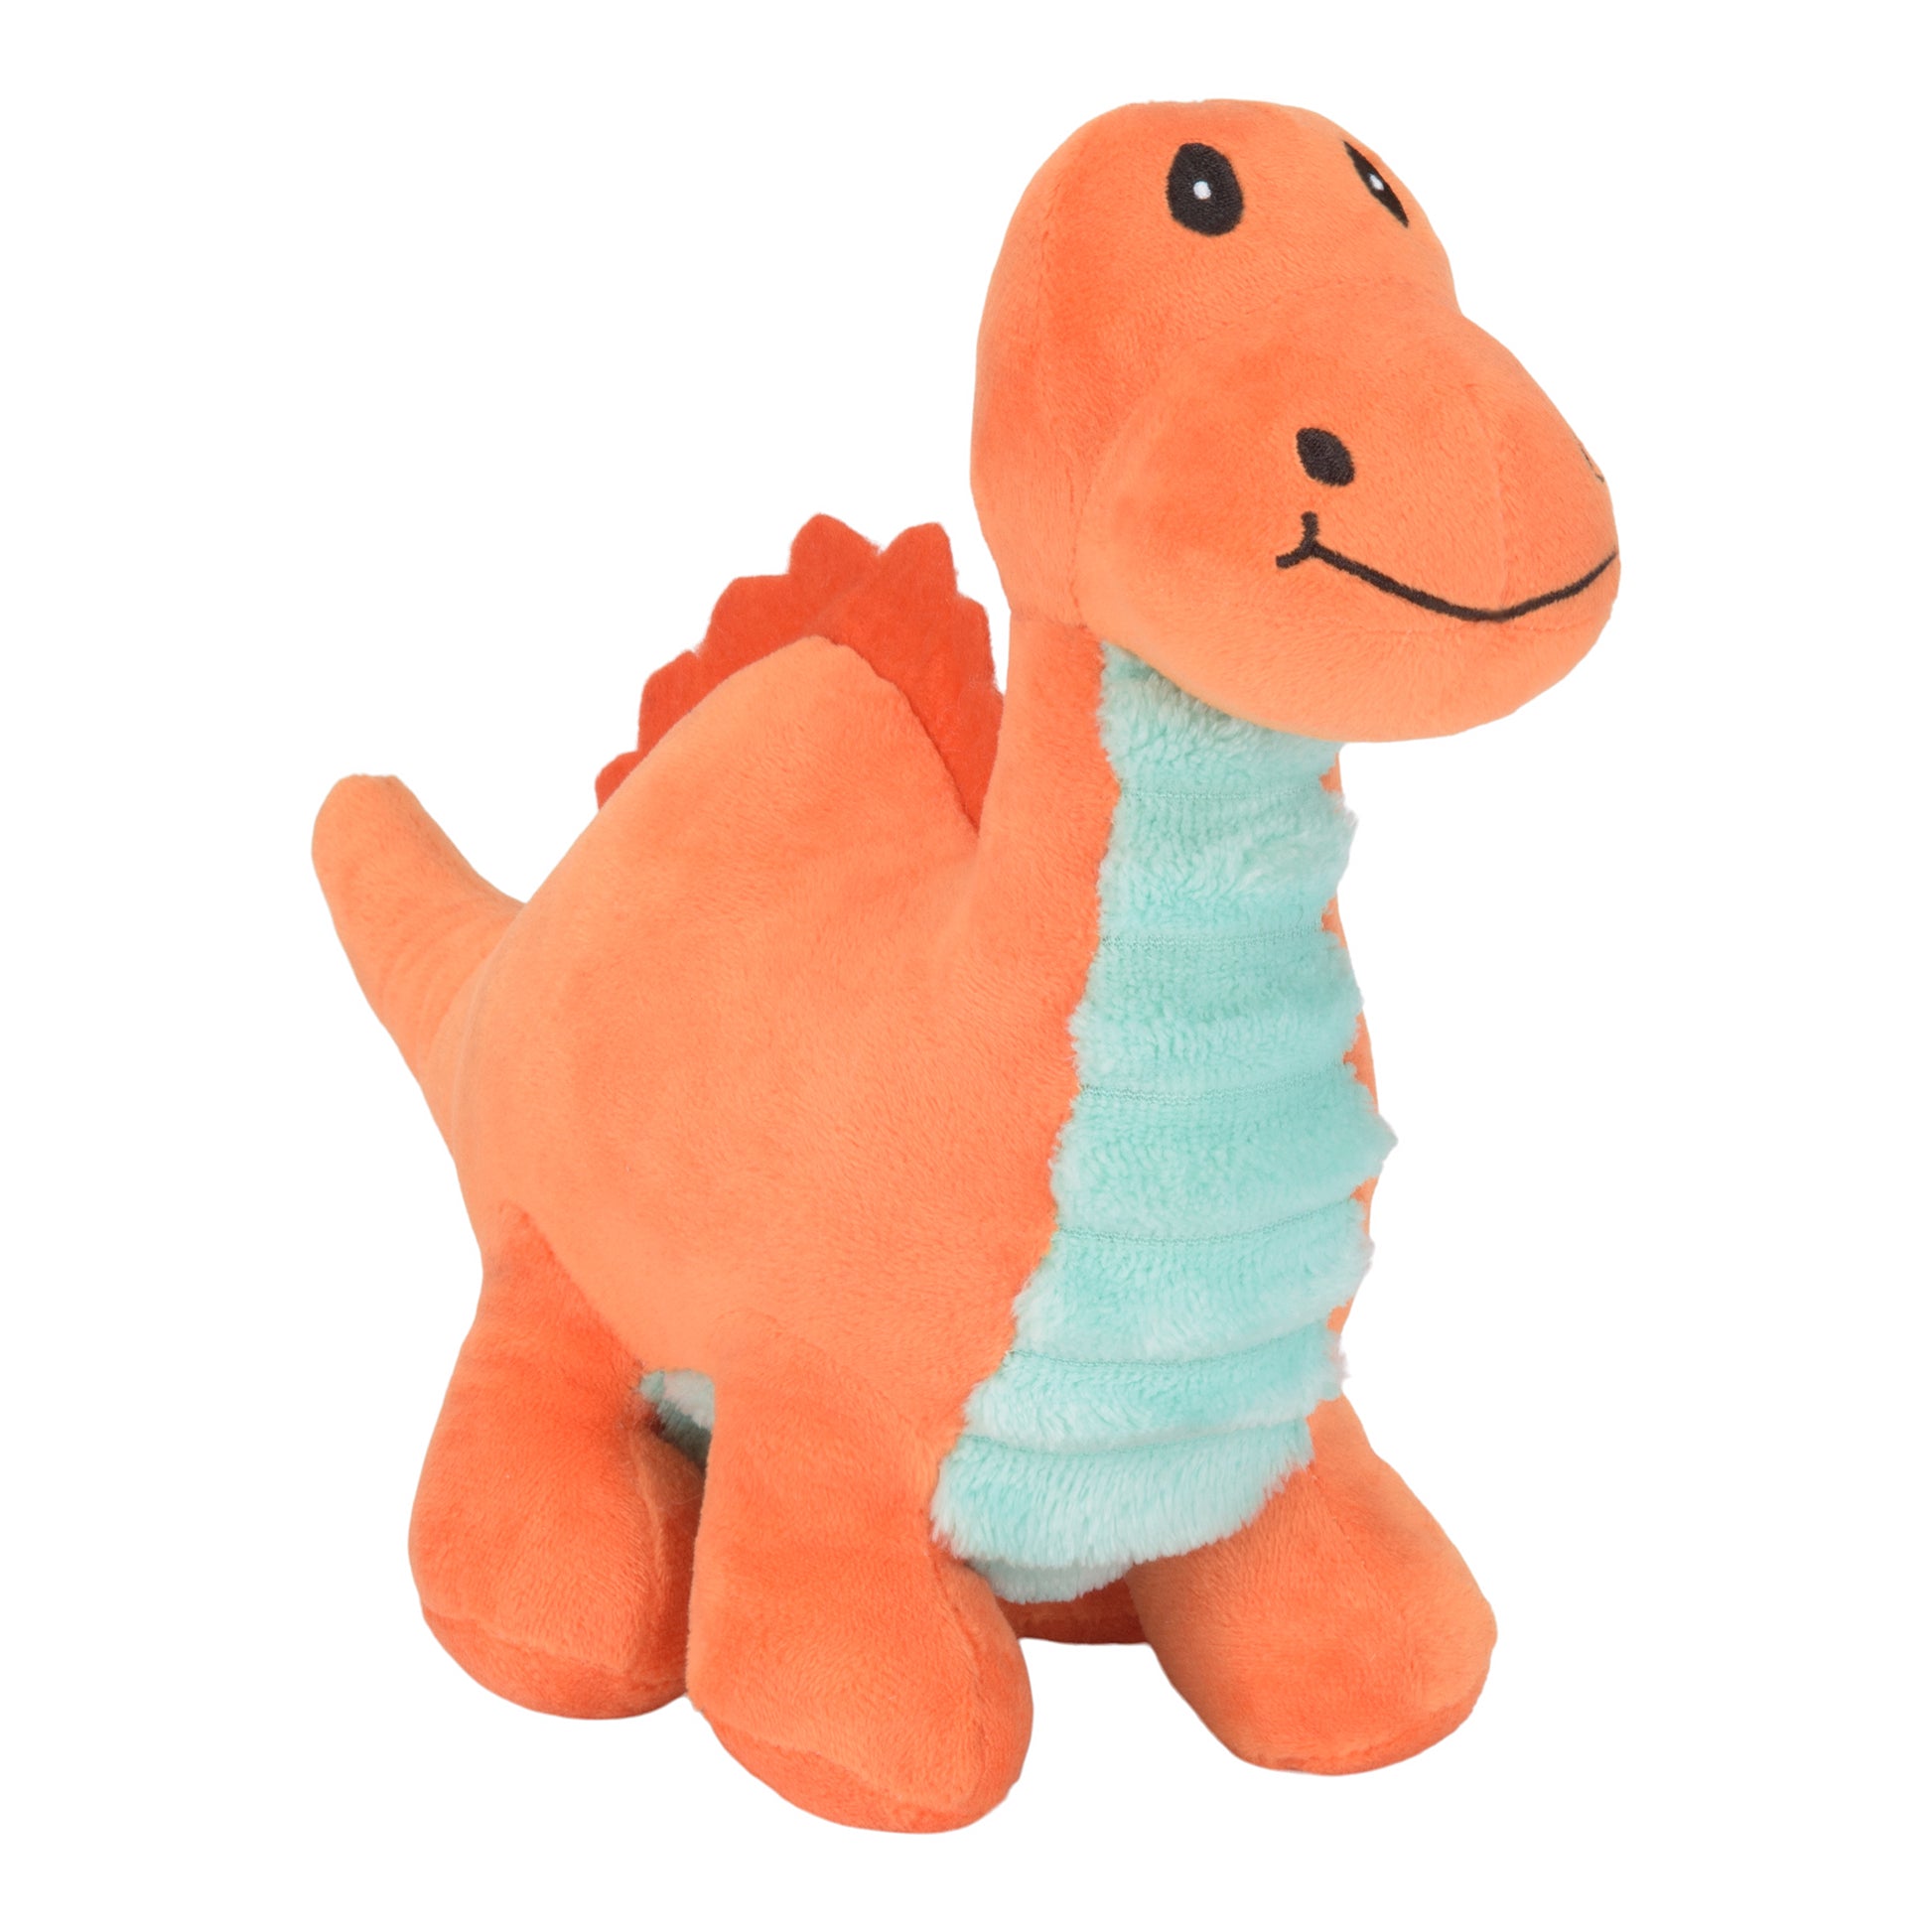 Dinosaur Million Years 4 Piece Crib Bedding Set by Sammy & Lou®; orange dinosaur plush toy, angled image